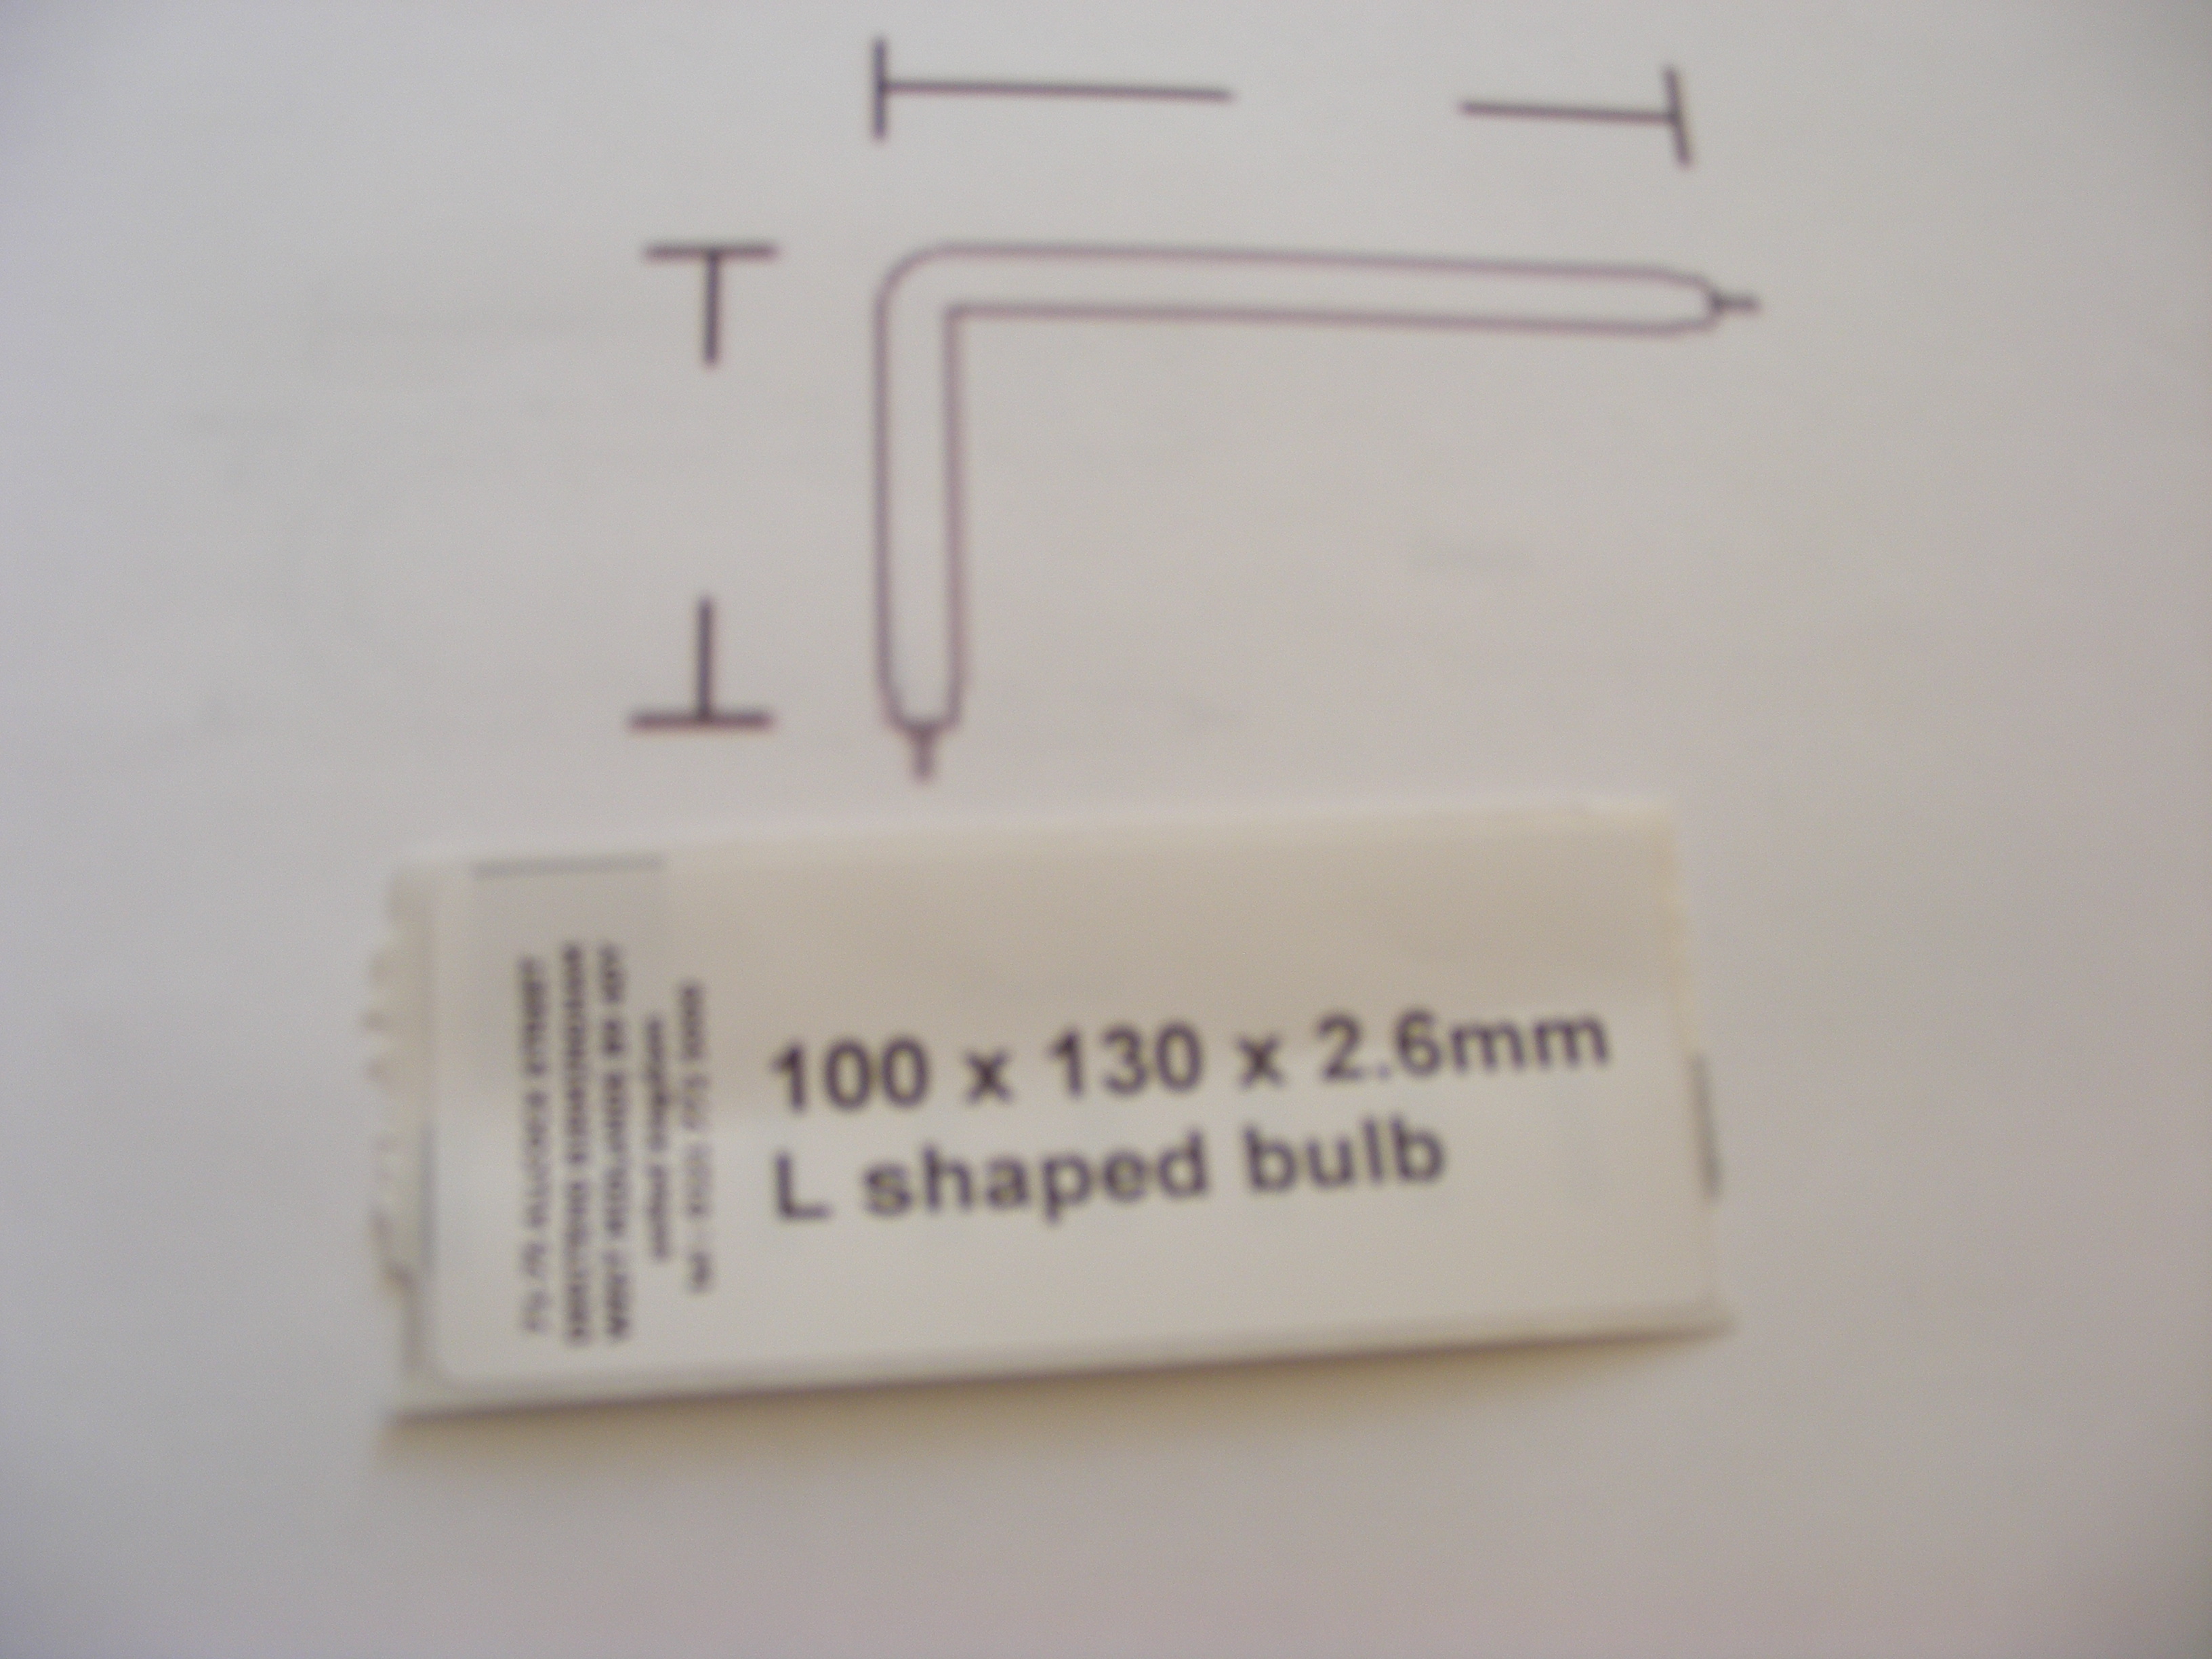 100 x 130 x 2.6mm L shaped bulb - Click Image to Close